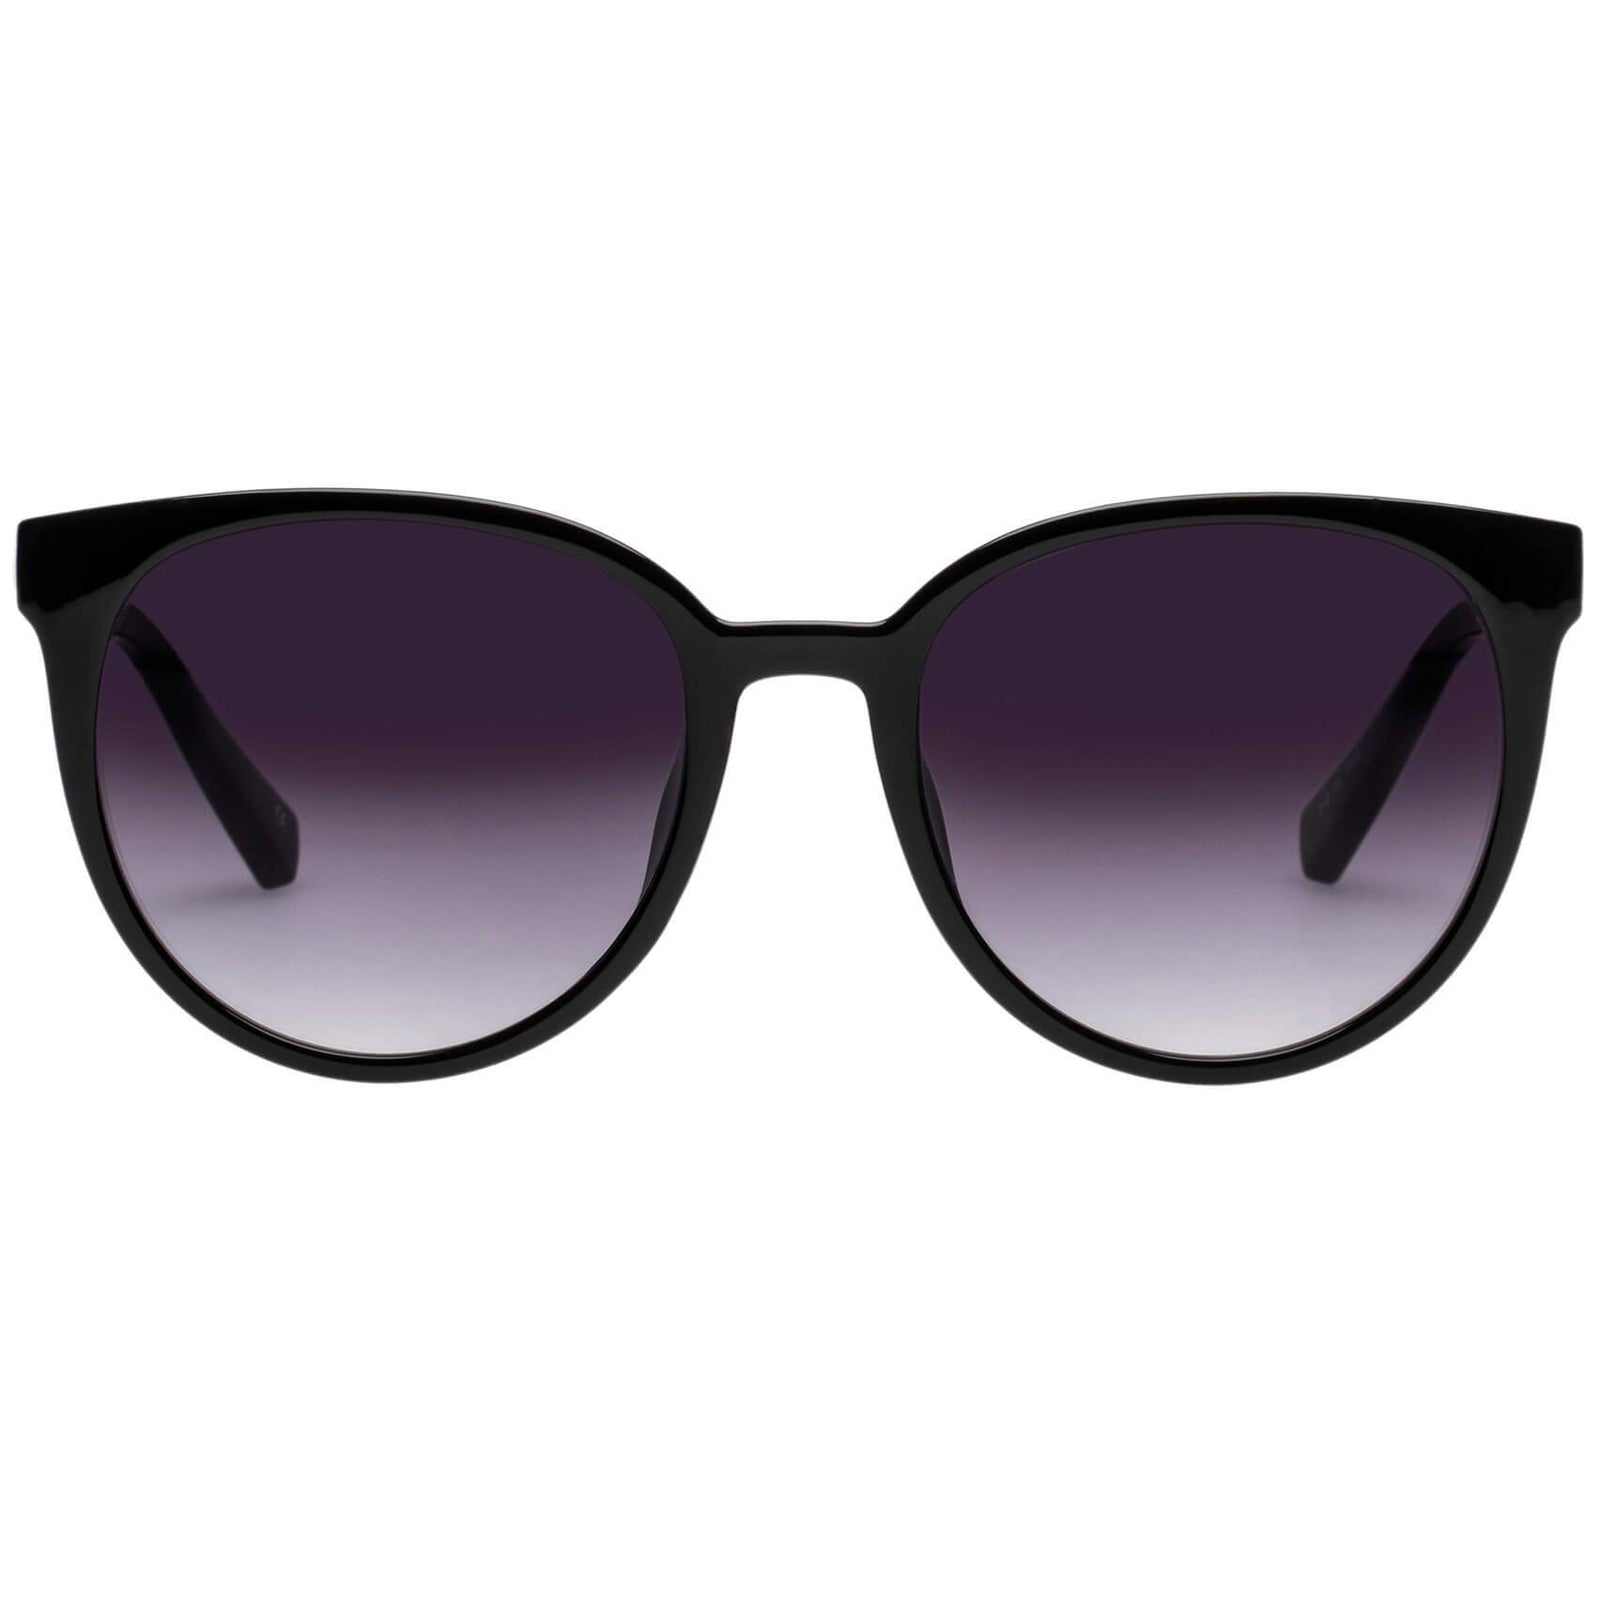 Mandy - Square Grey/Tortoiseshell Sunglasses for Women - EFE